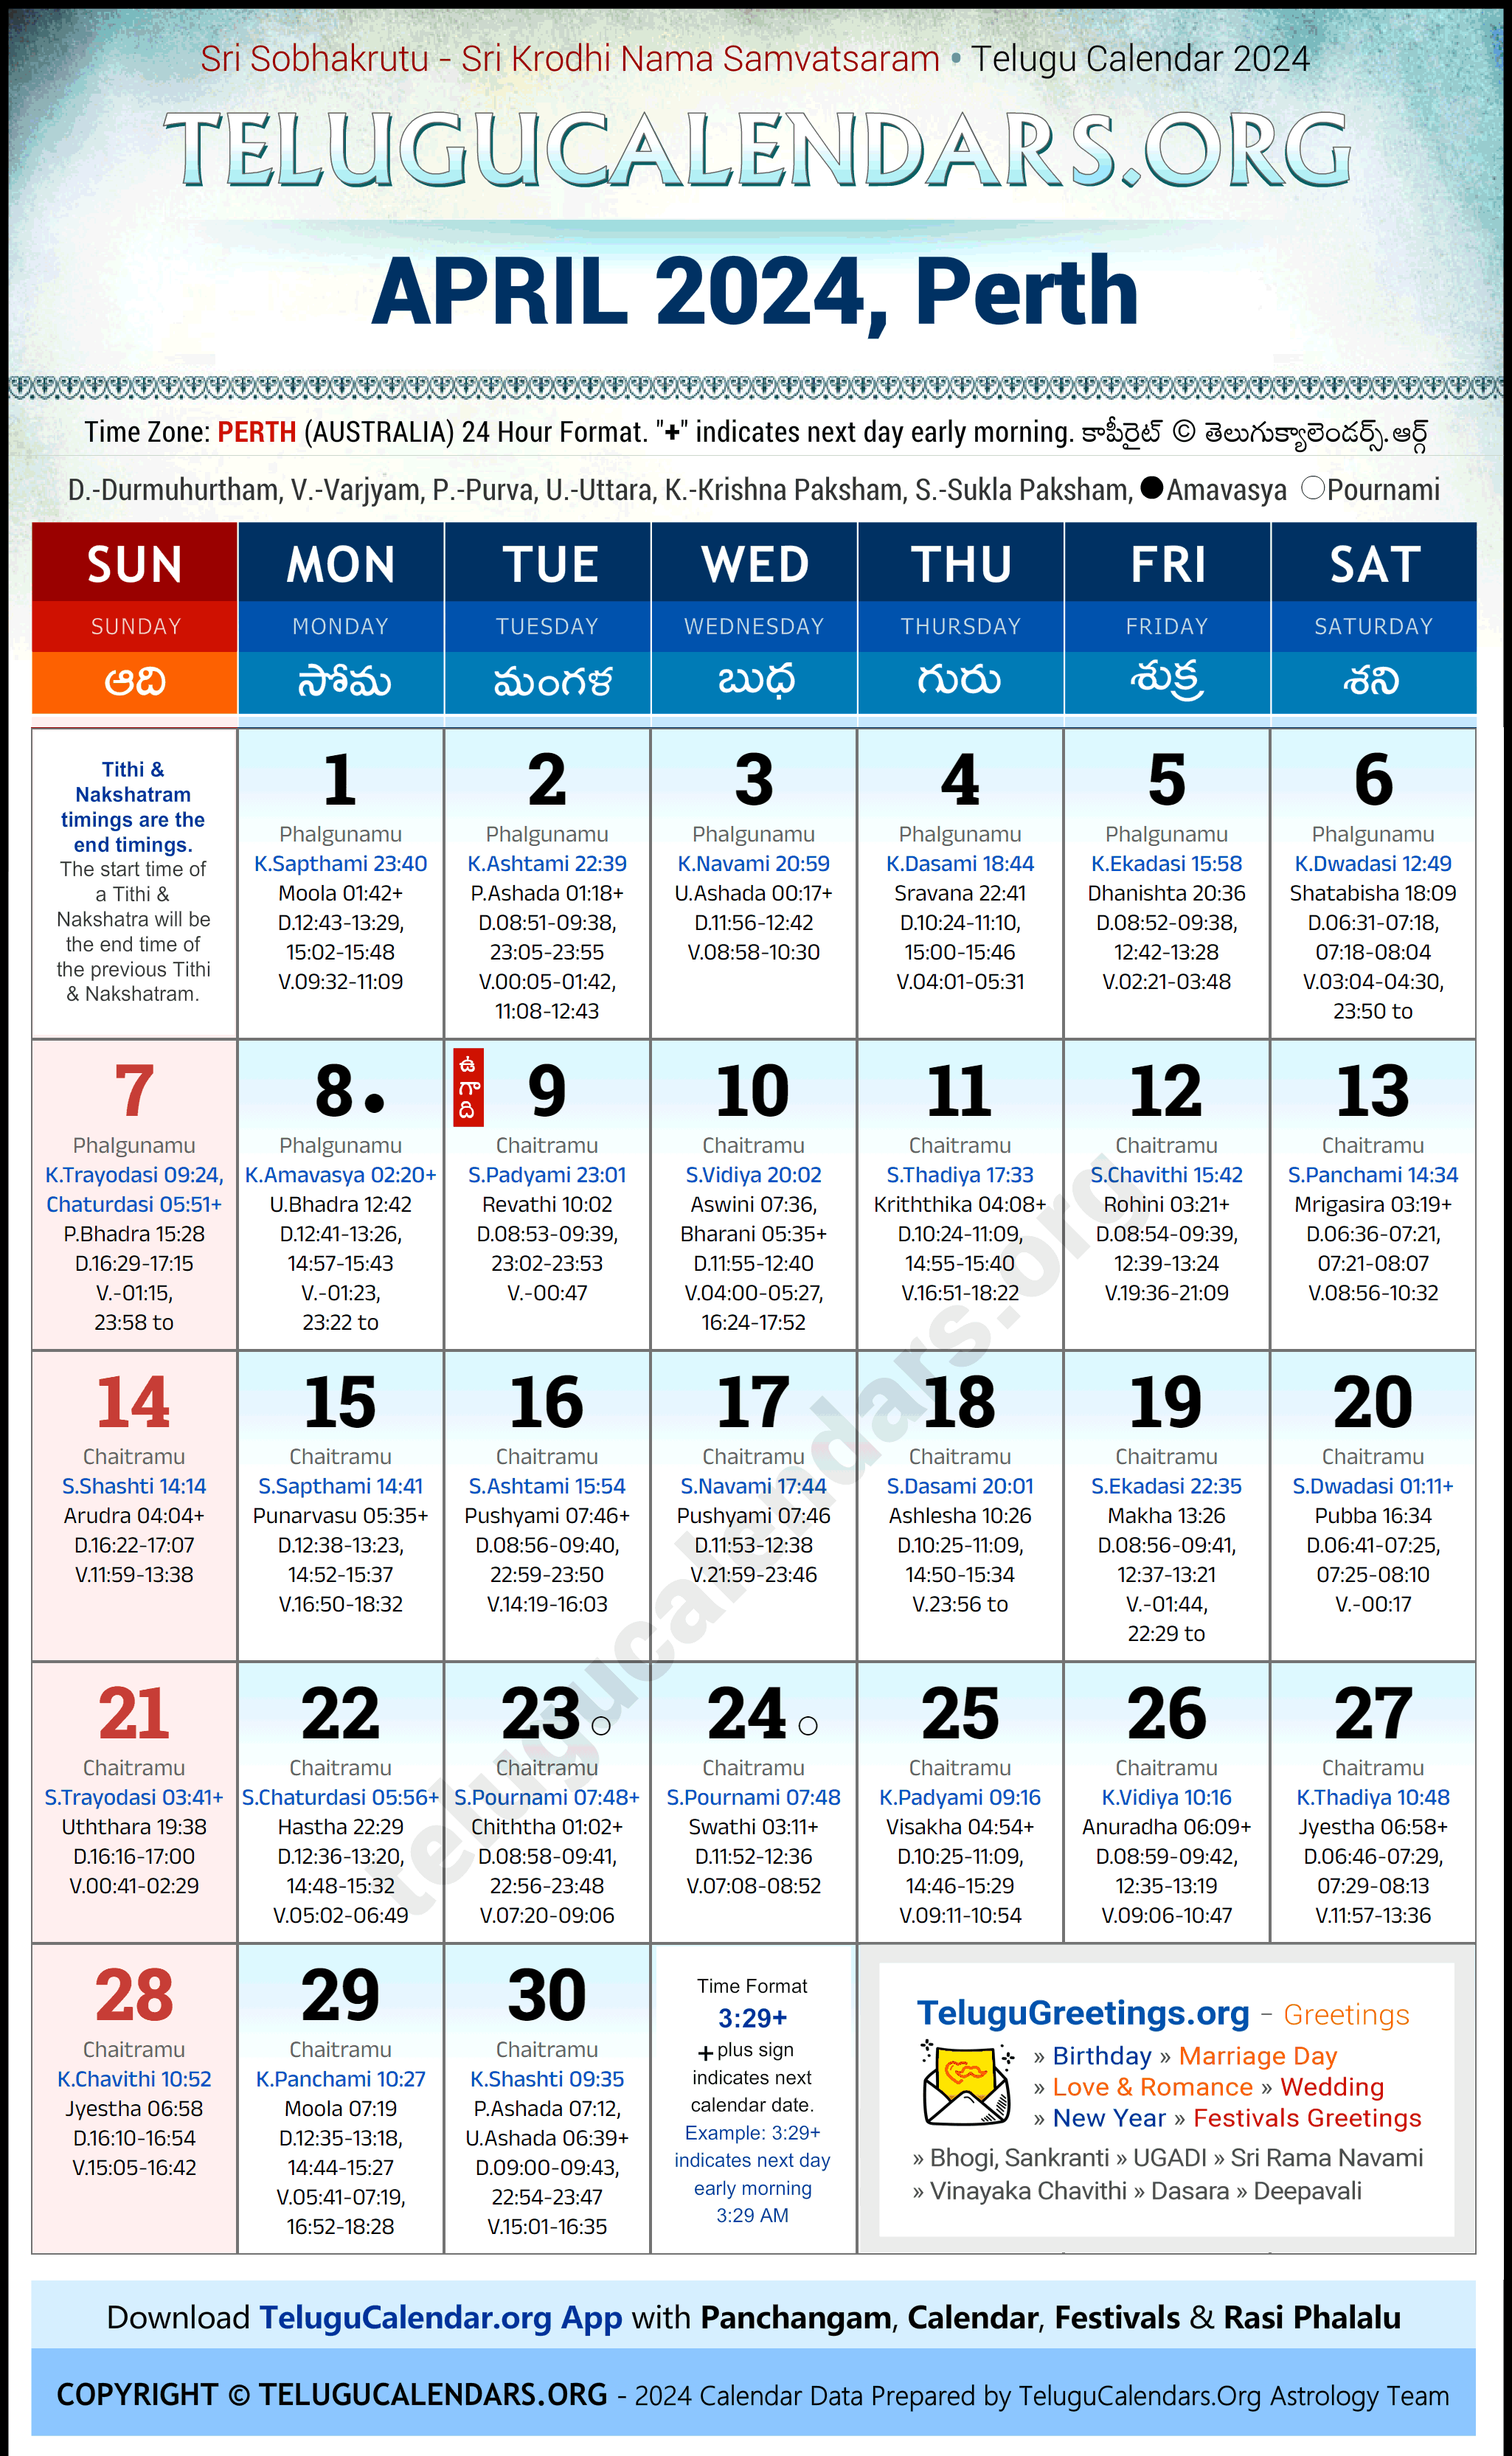 Telugu Calendar 2024 April Festivals for Perth